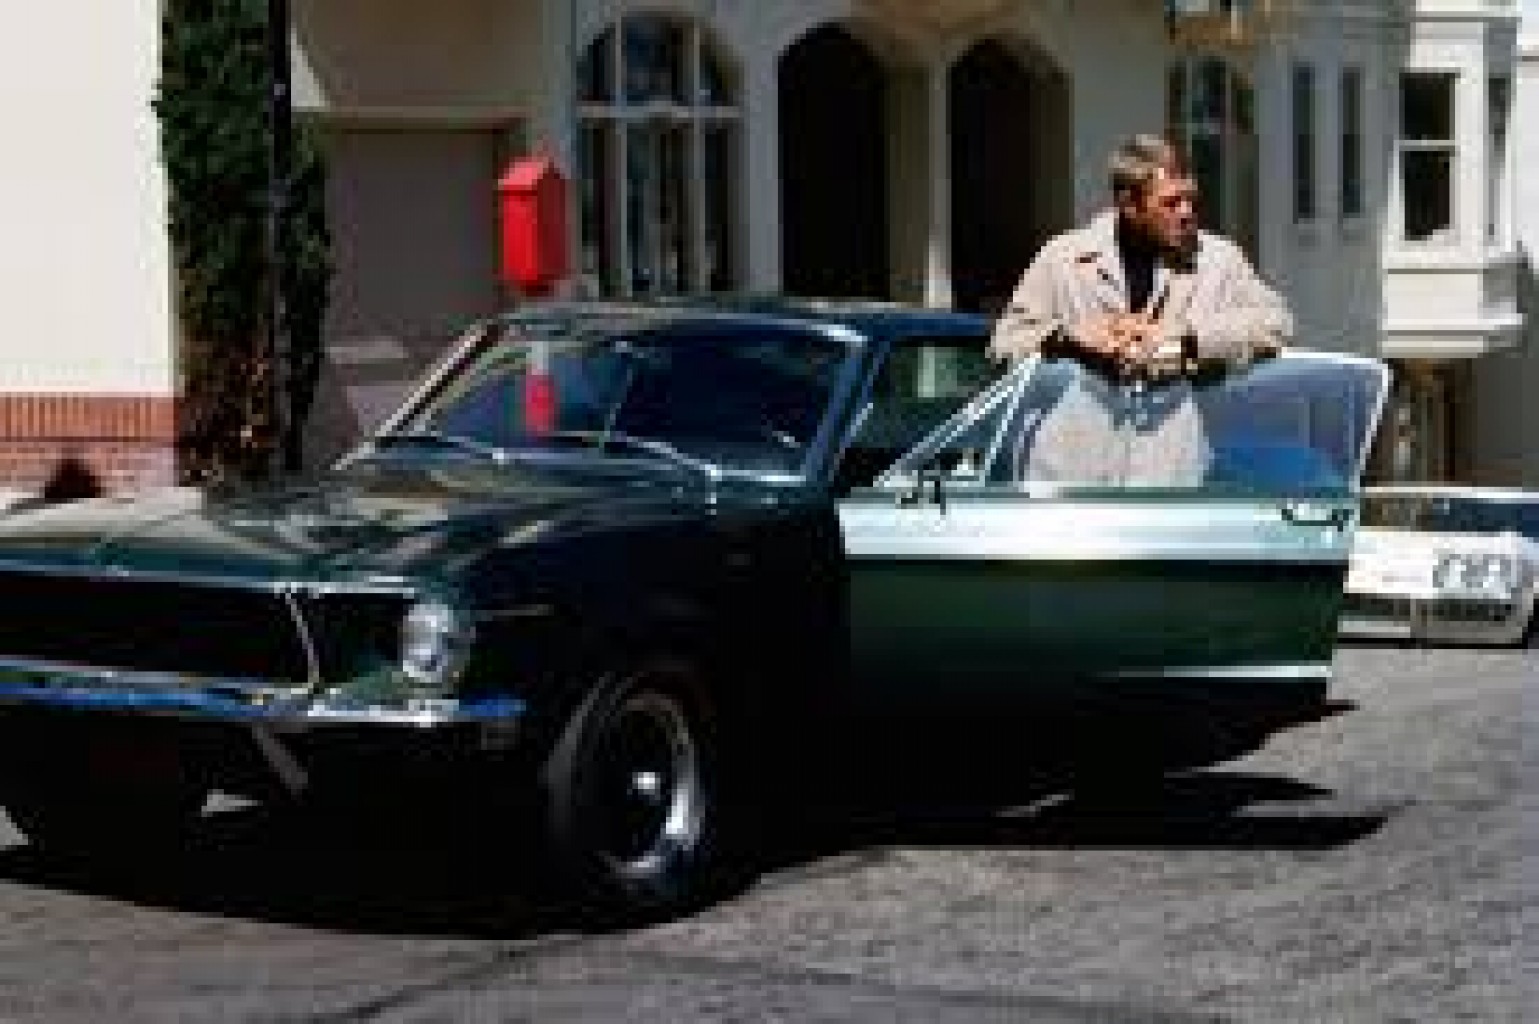 El Mustang 1968 de la película "Bullitt" se vendió en un precio récord